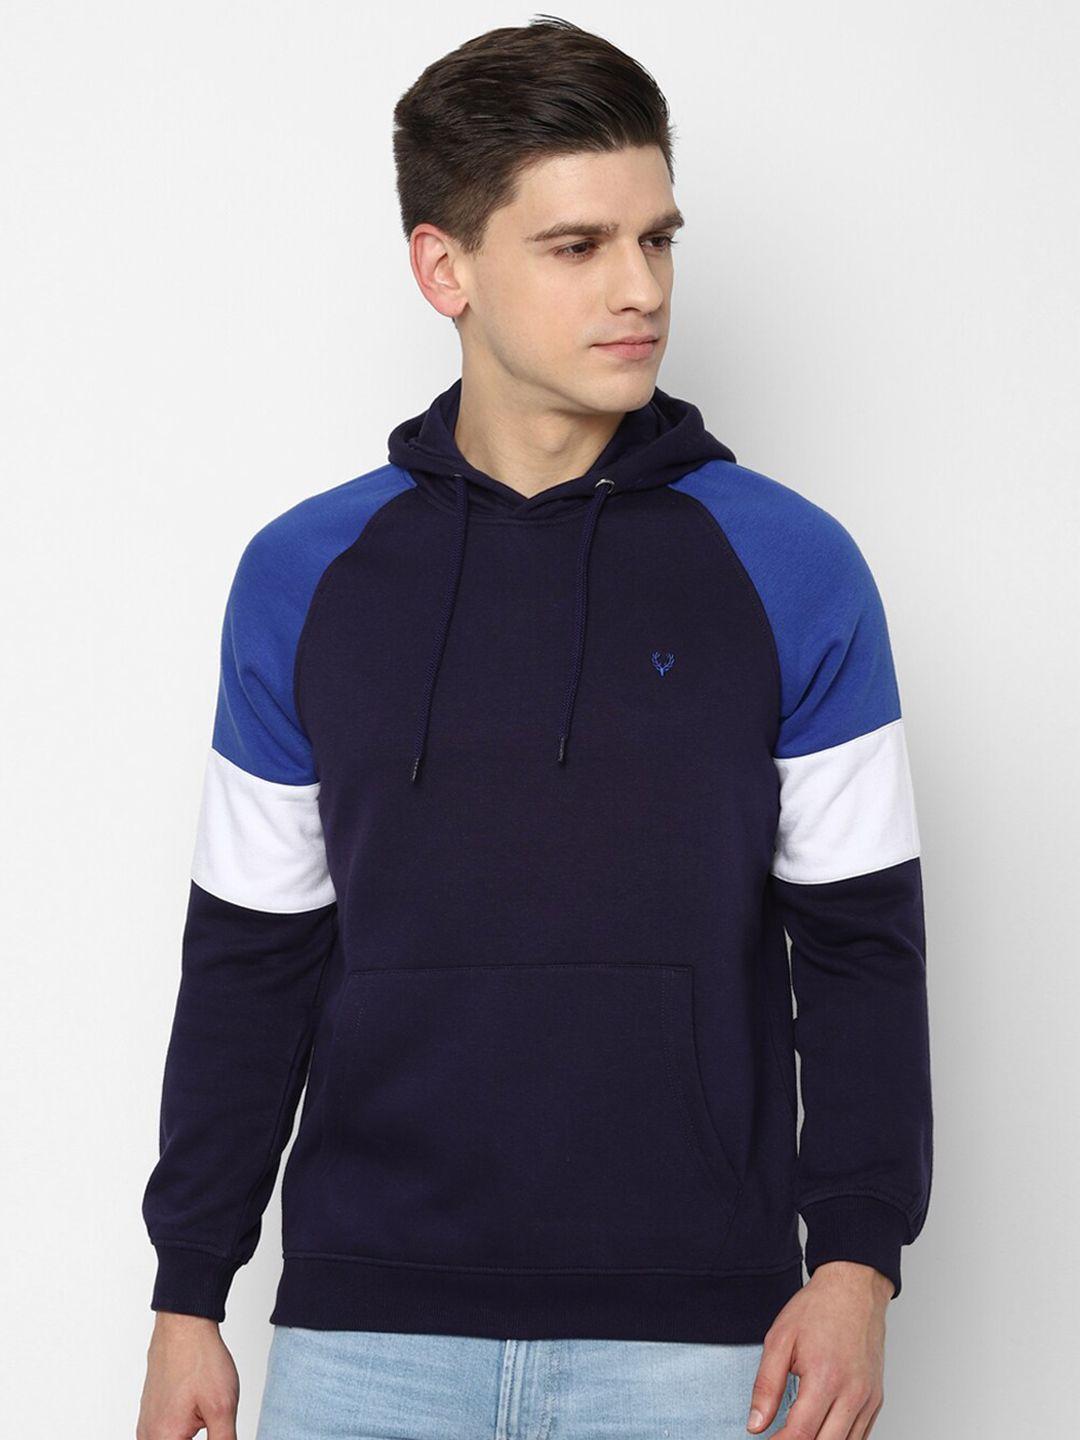 allen solly men navy blue colourblocked hooded sweatshirt